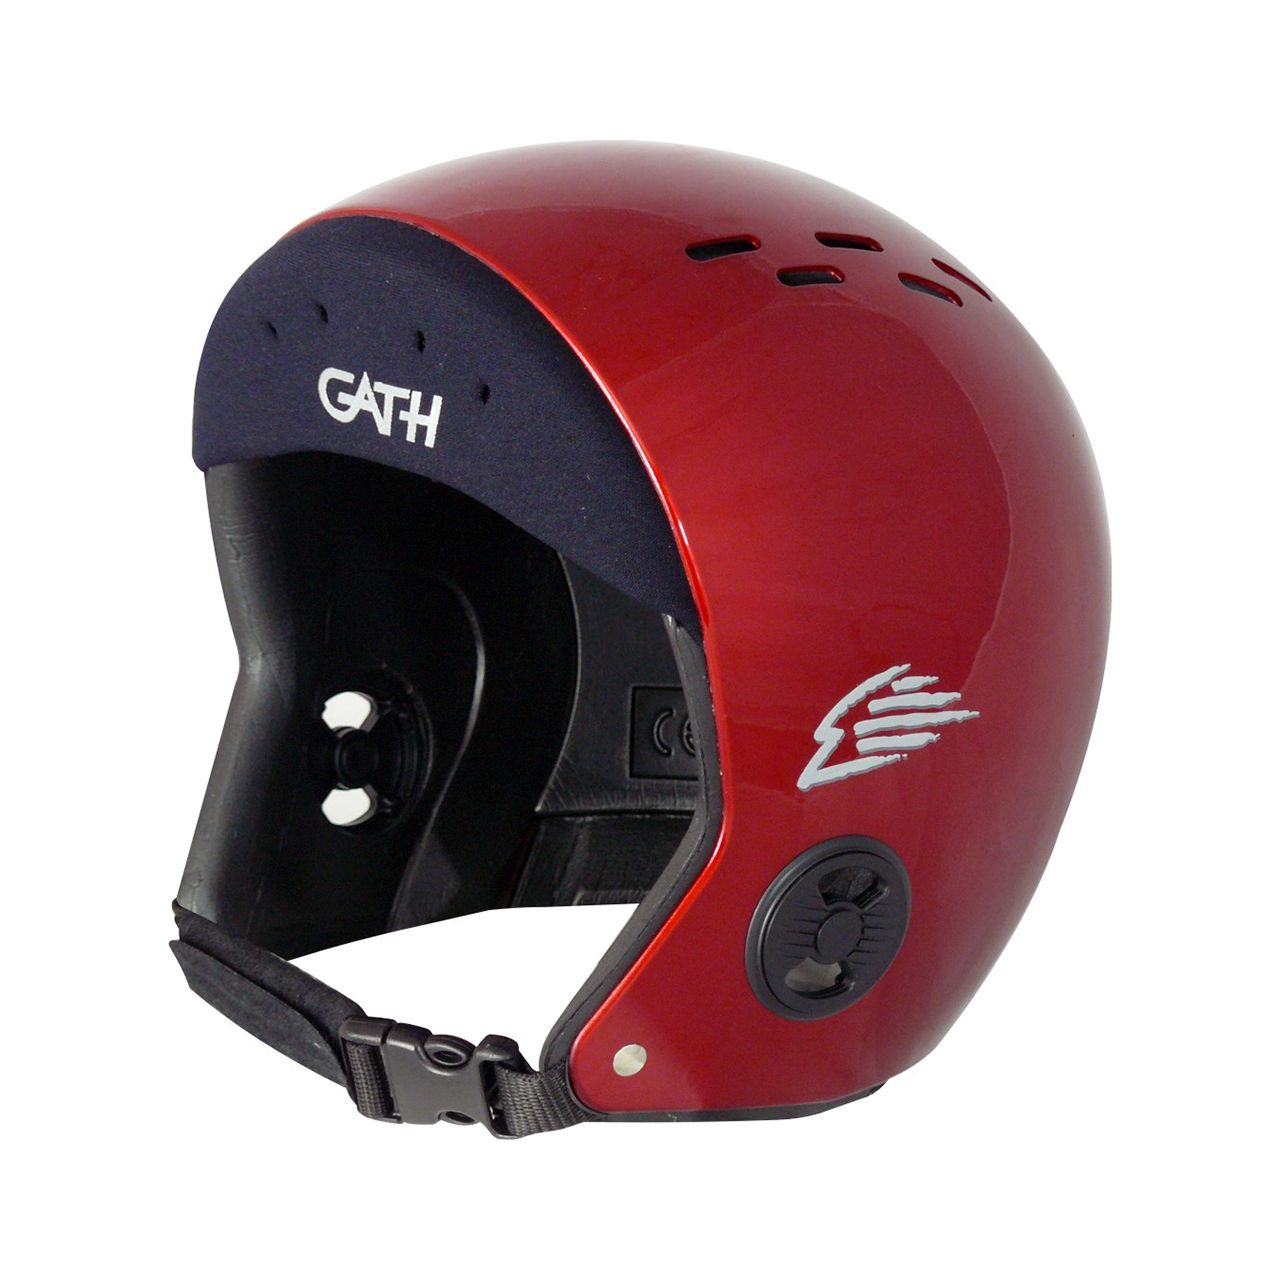 Red Ski Helmet Size Chart